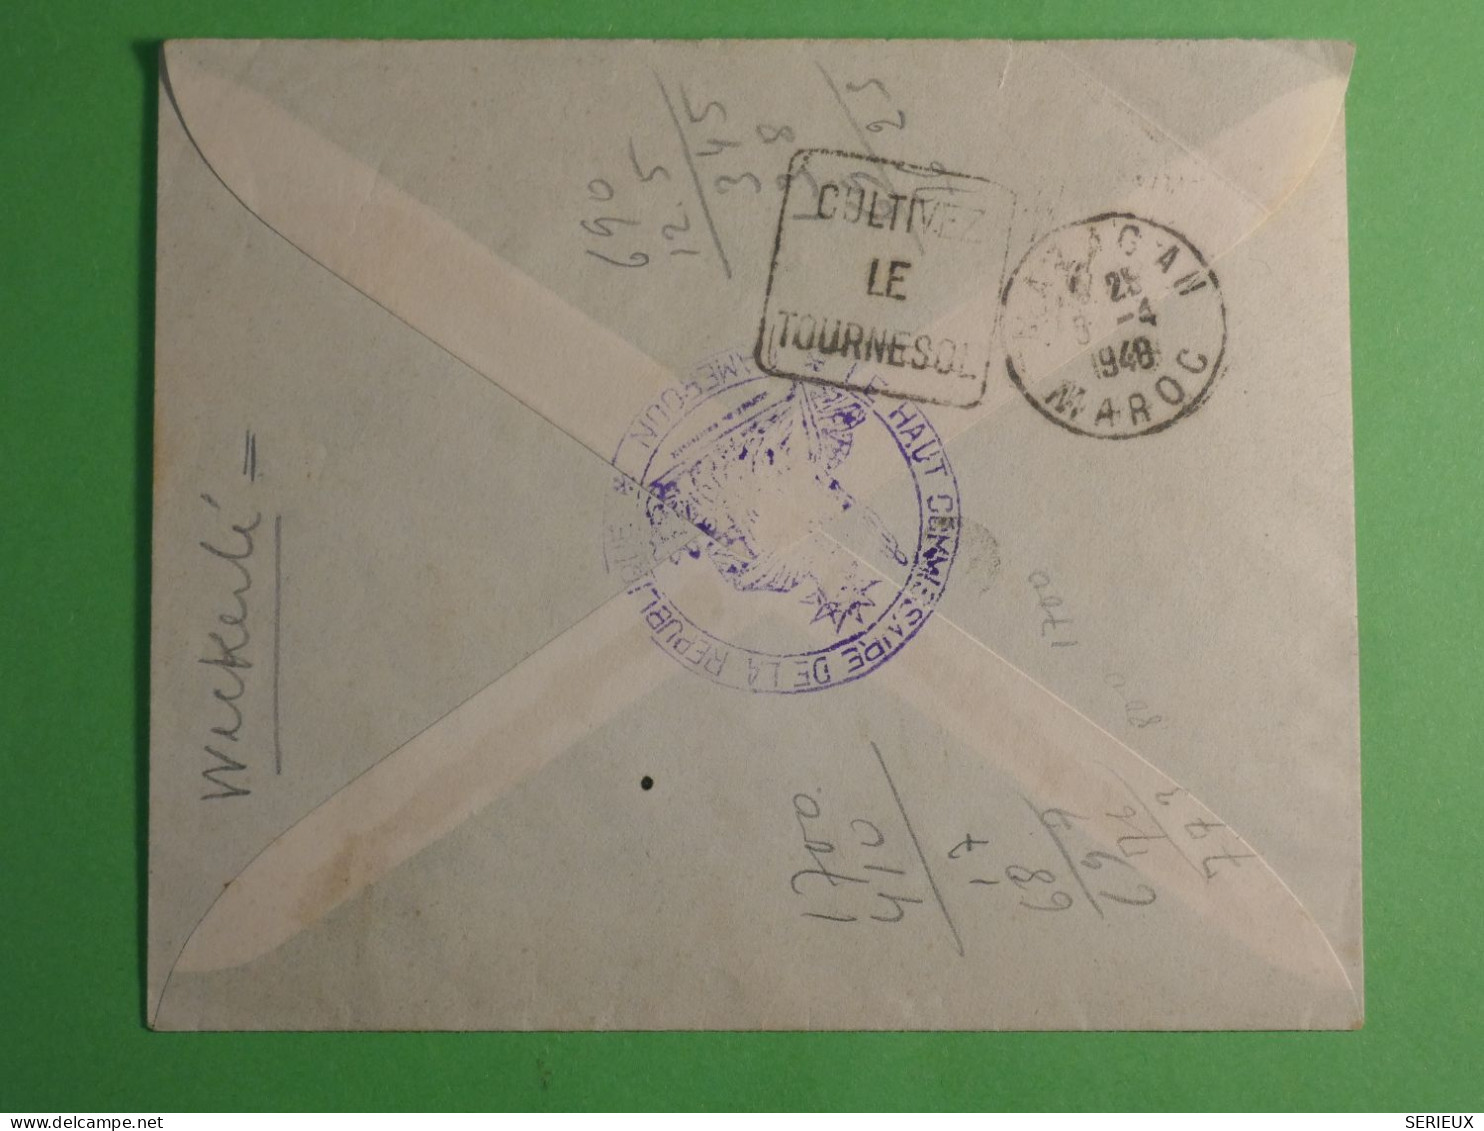 DN9 CAMEROUN  LETTRE OFFICIELLE  1949  A MAZAGAN  MAROC  ++  AEROPHILATELIE + AFF.  INTERESSANT+++ - Covers & Documents